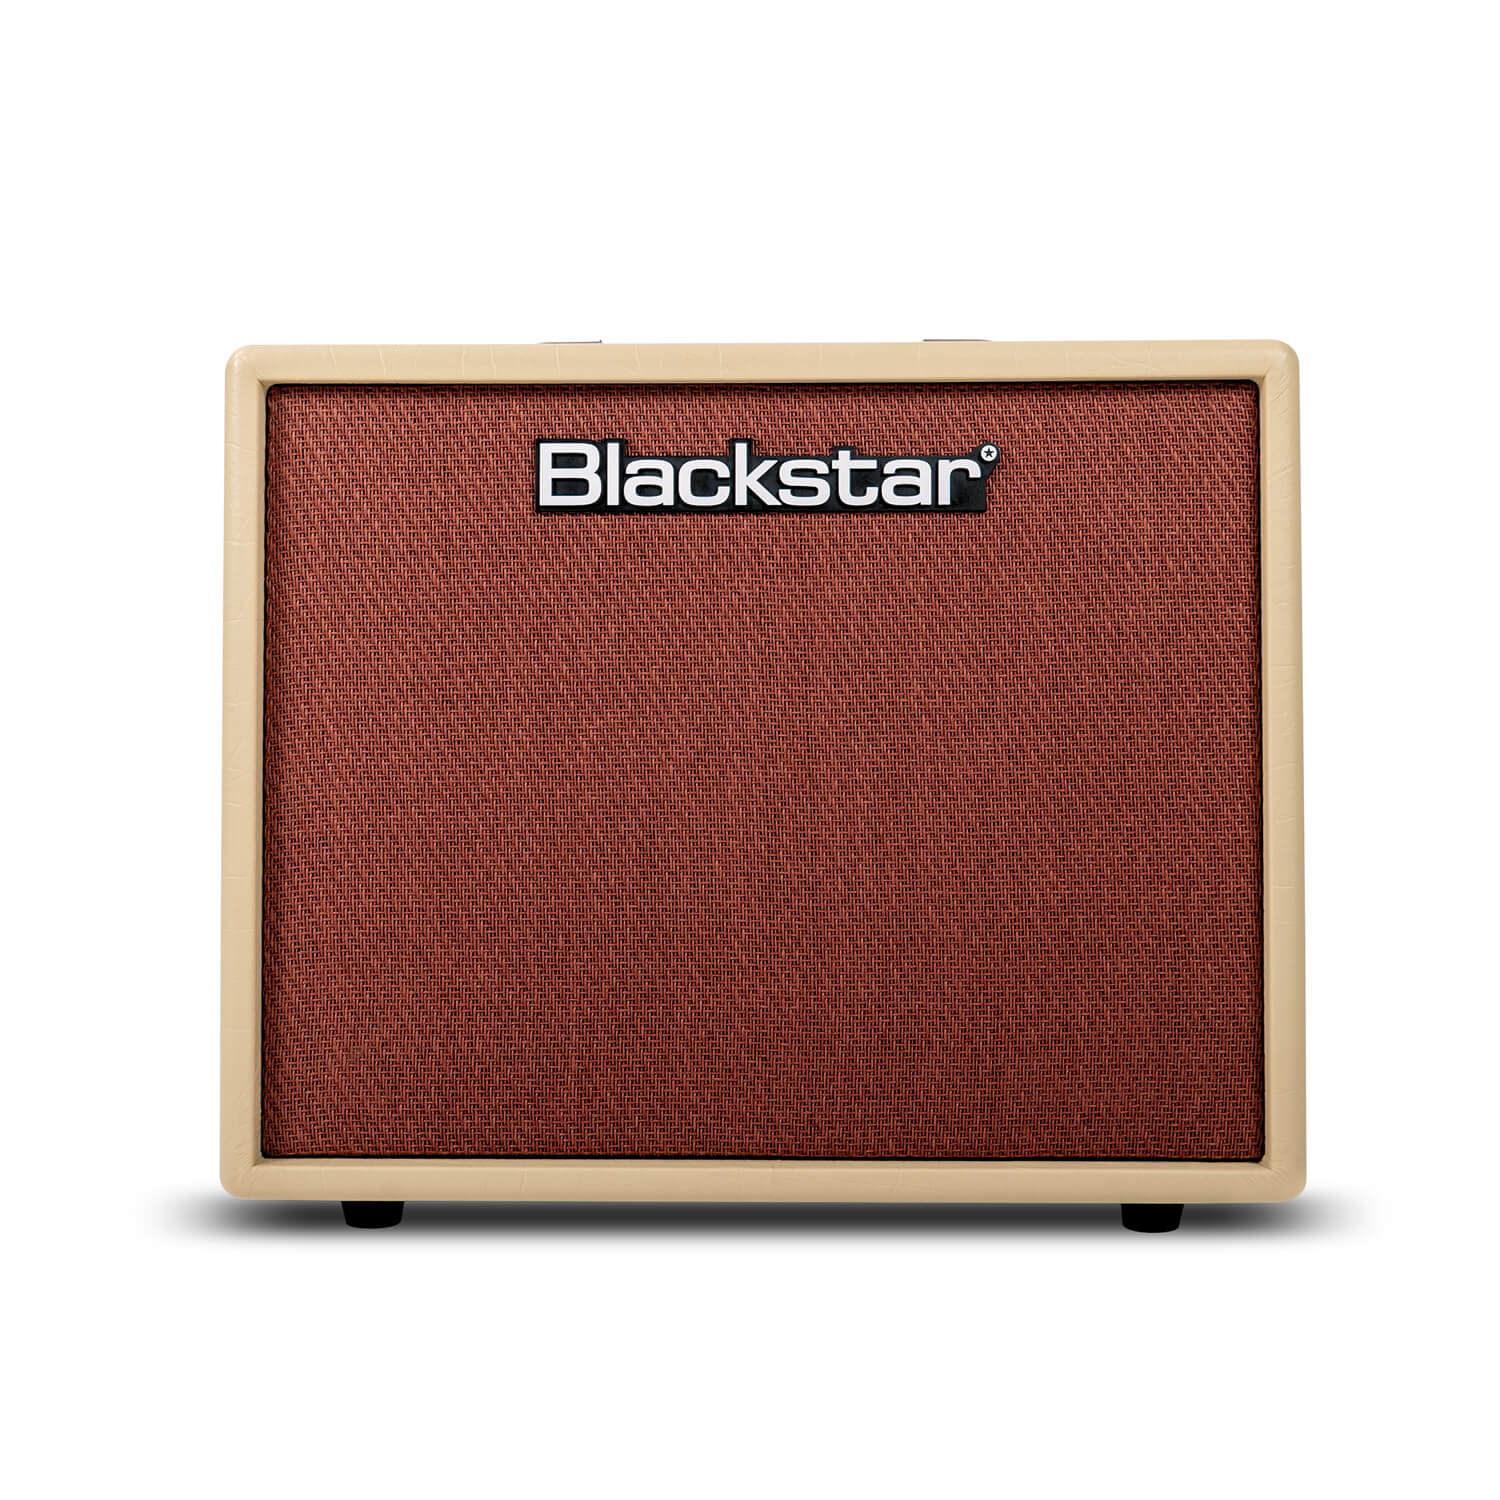 Blackstar Debut 50R (Cream/Oxblood)